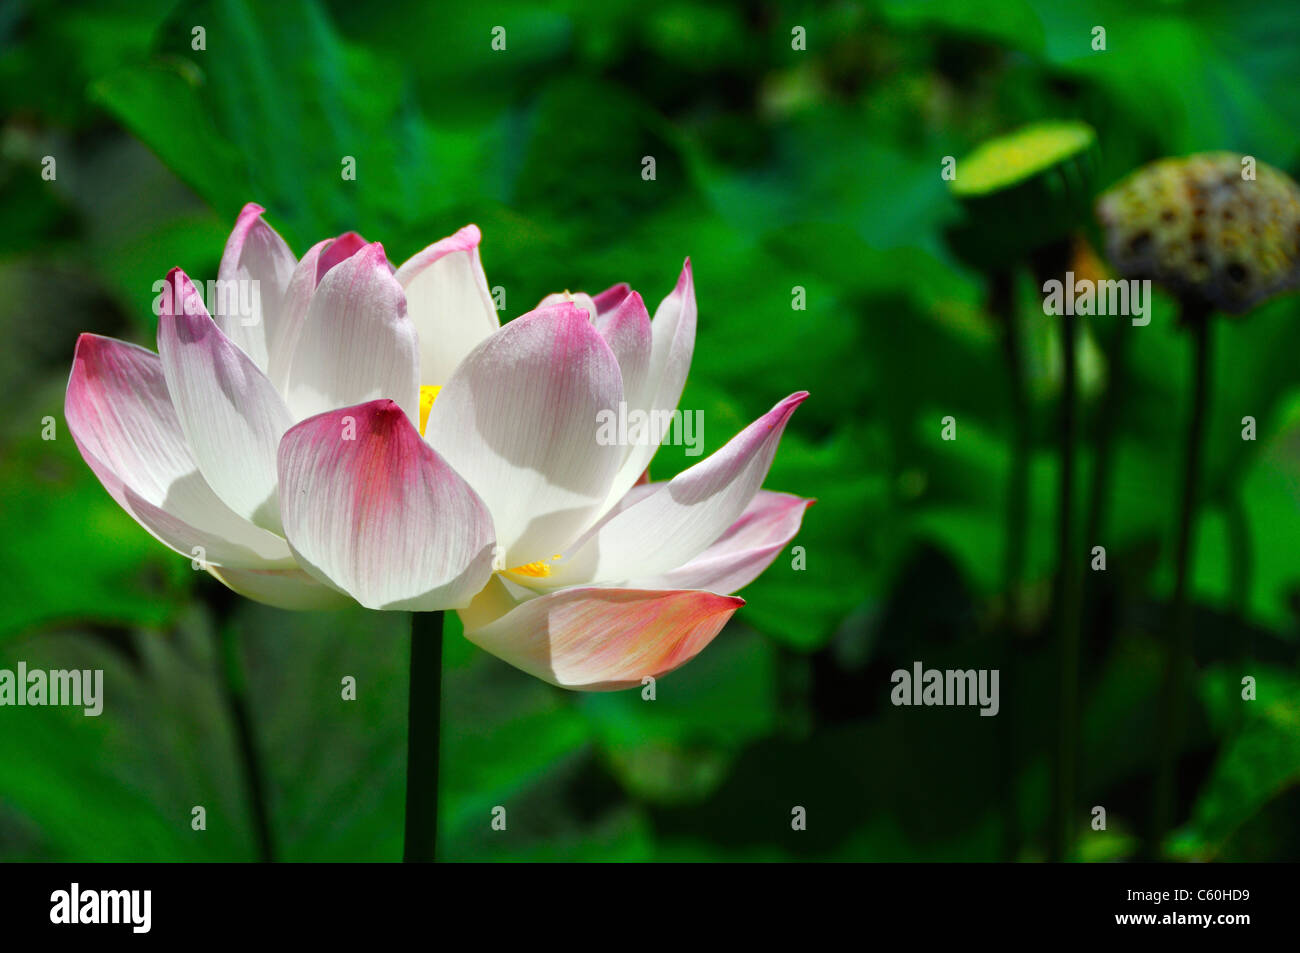 Nelumbo nucifera (Sagrada Familia Nelumbonaceae lotus). Perenne acuática nativa de la India. Foto de stock